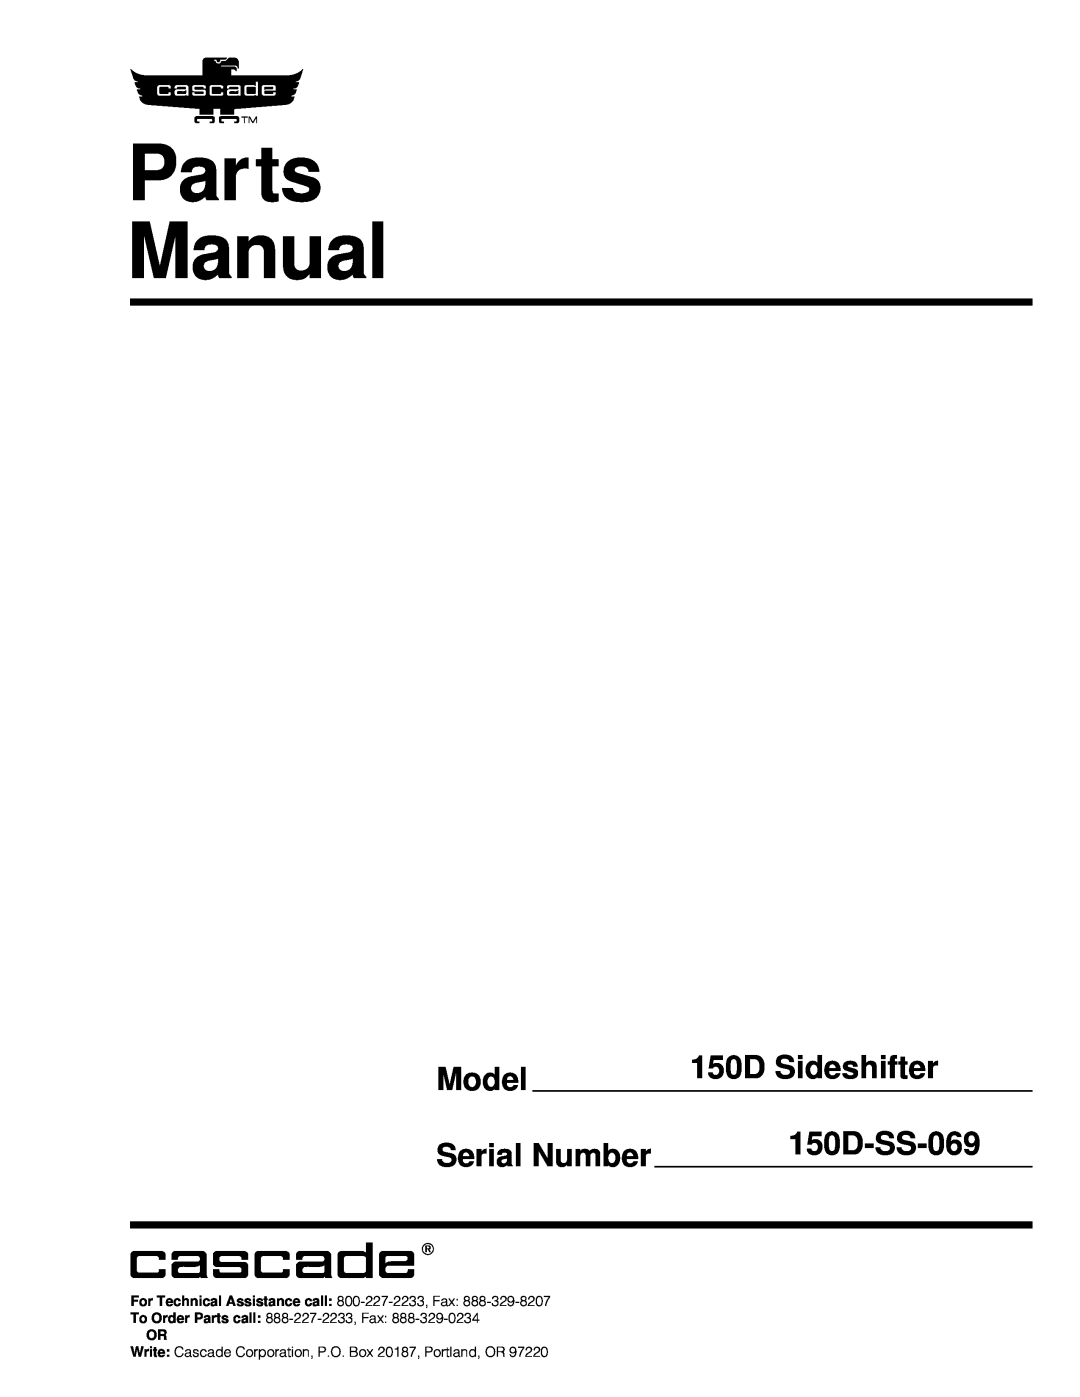 Cascade manual Model, 150D Sideshifter, Serial Number, 150D-SS-069, Parts Manual, cascade 